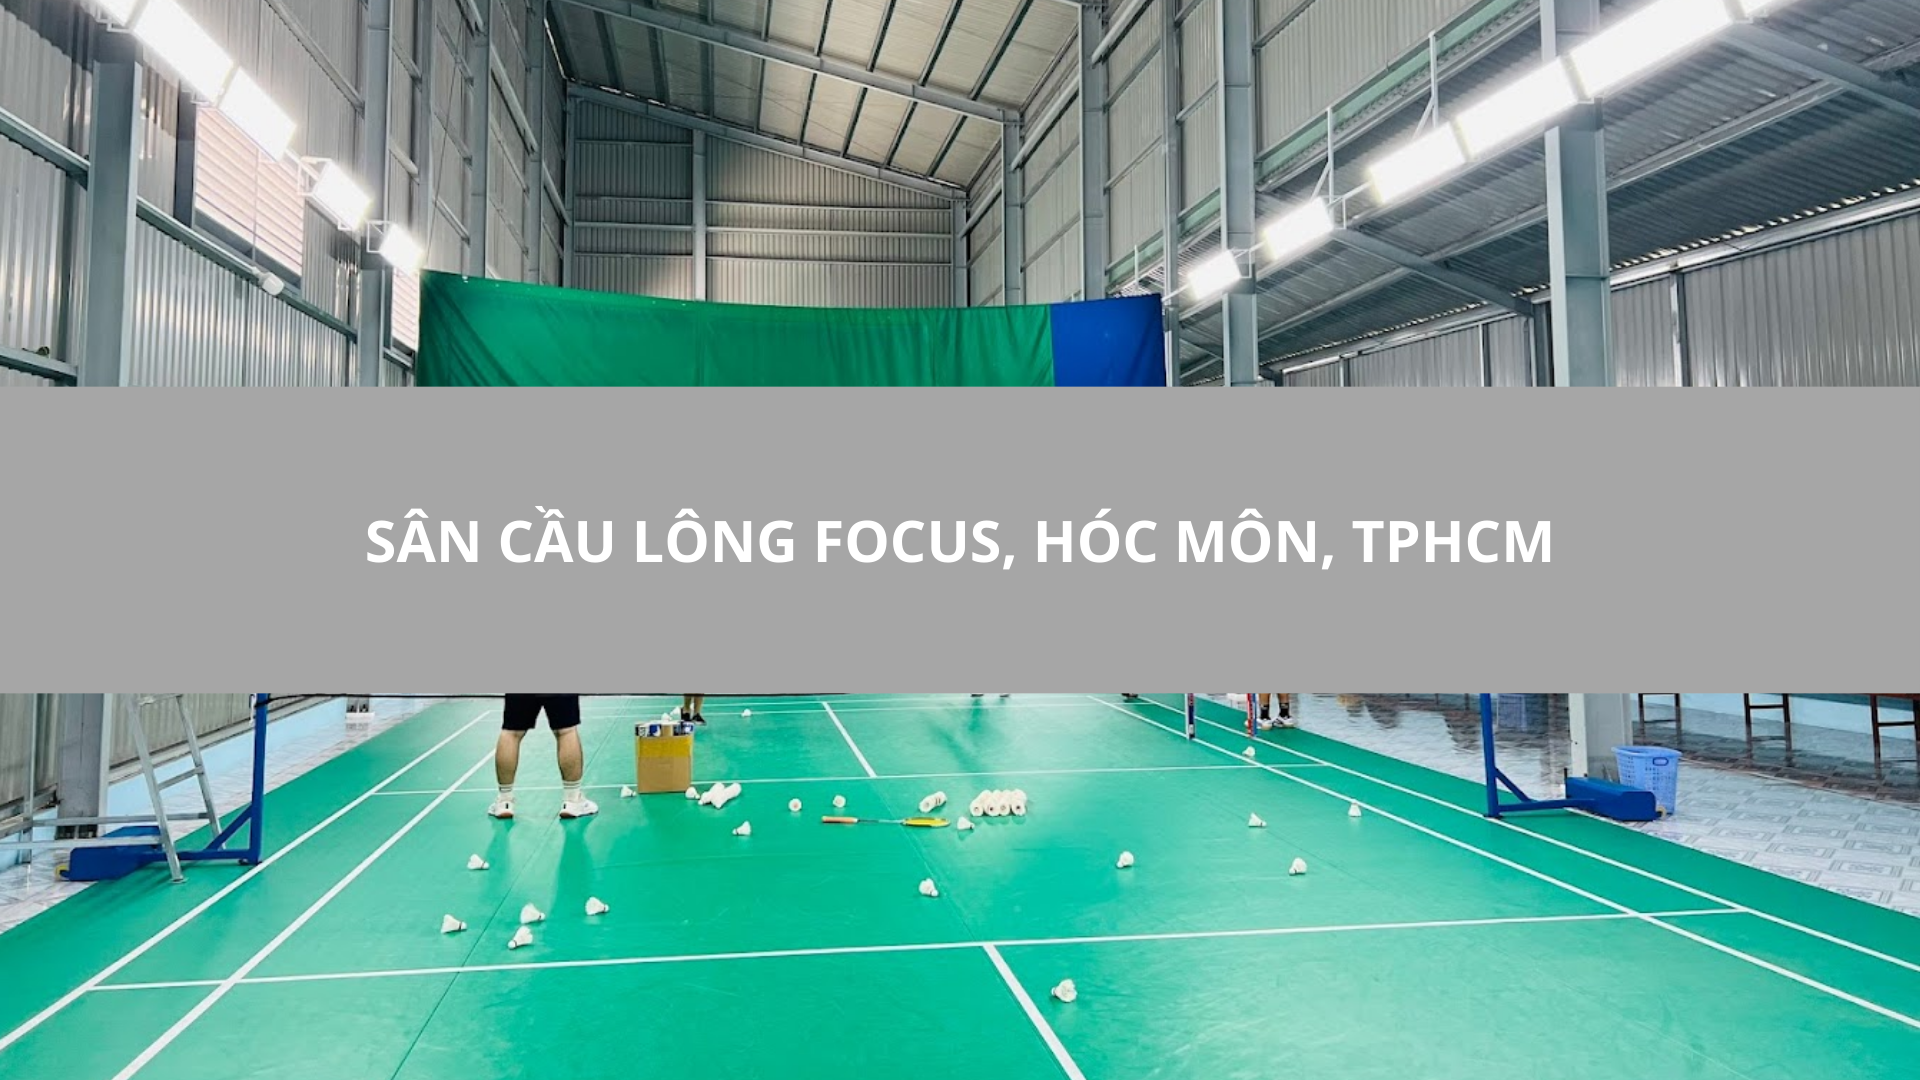 Sân Cầu Lông Focus, Hóc Môn, TPHCM